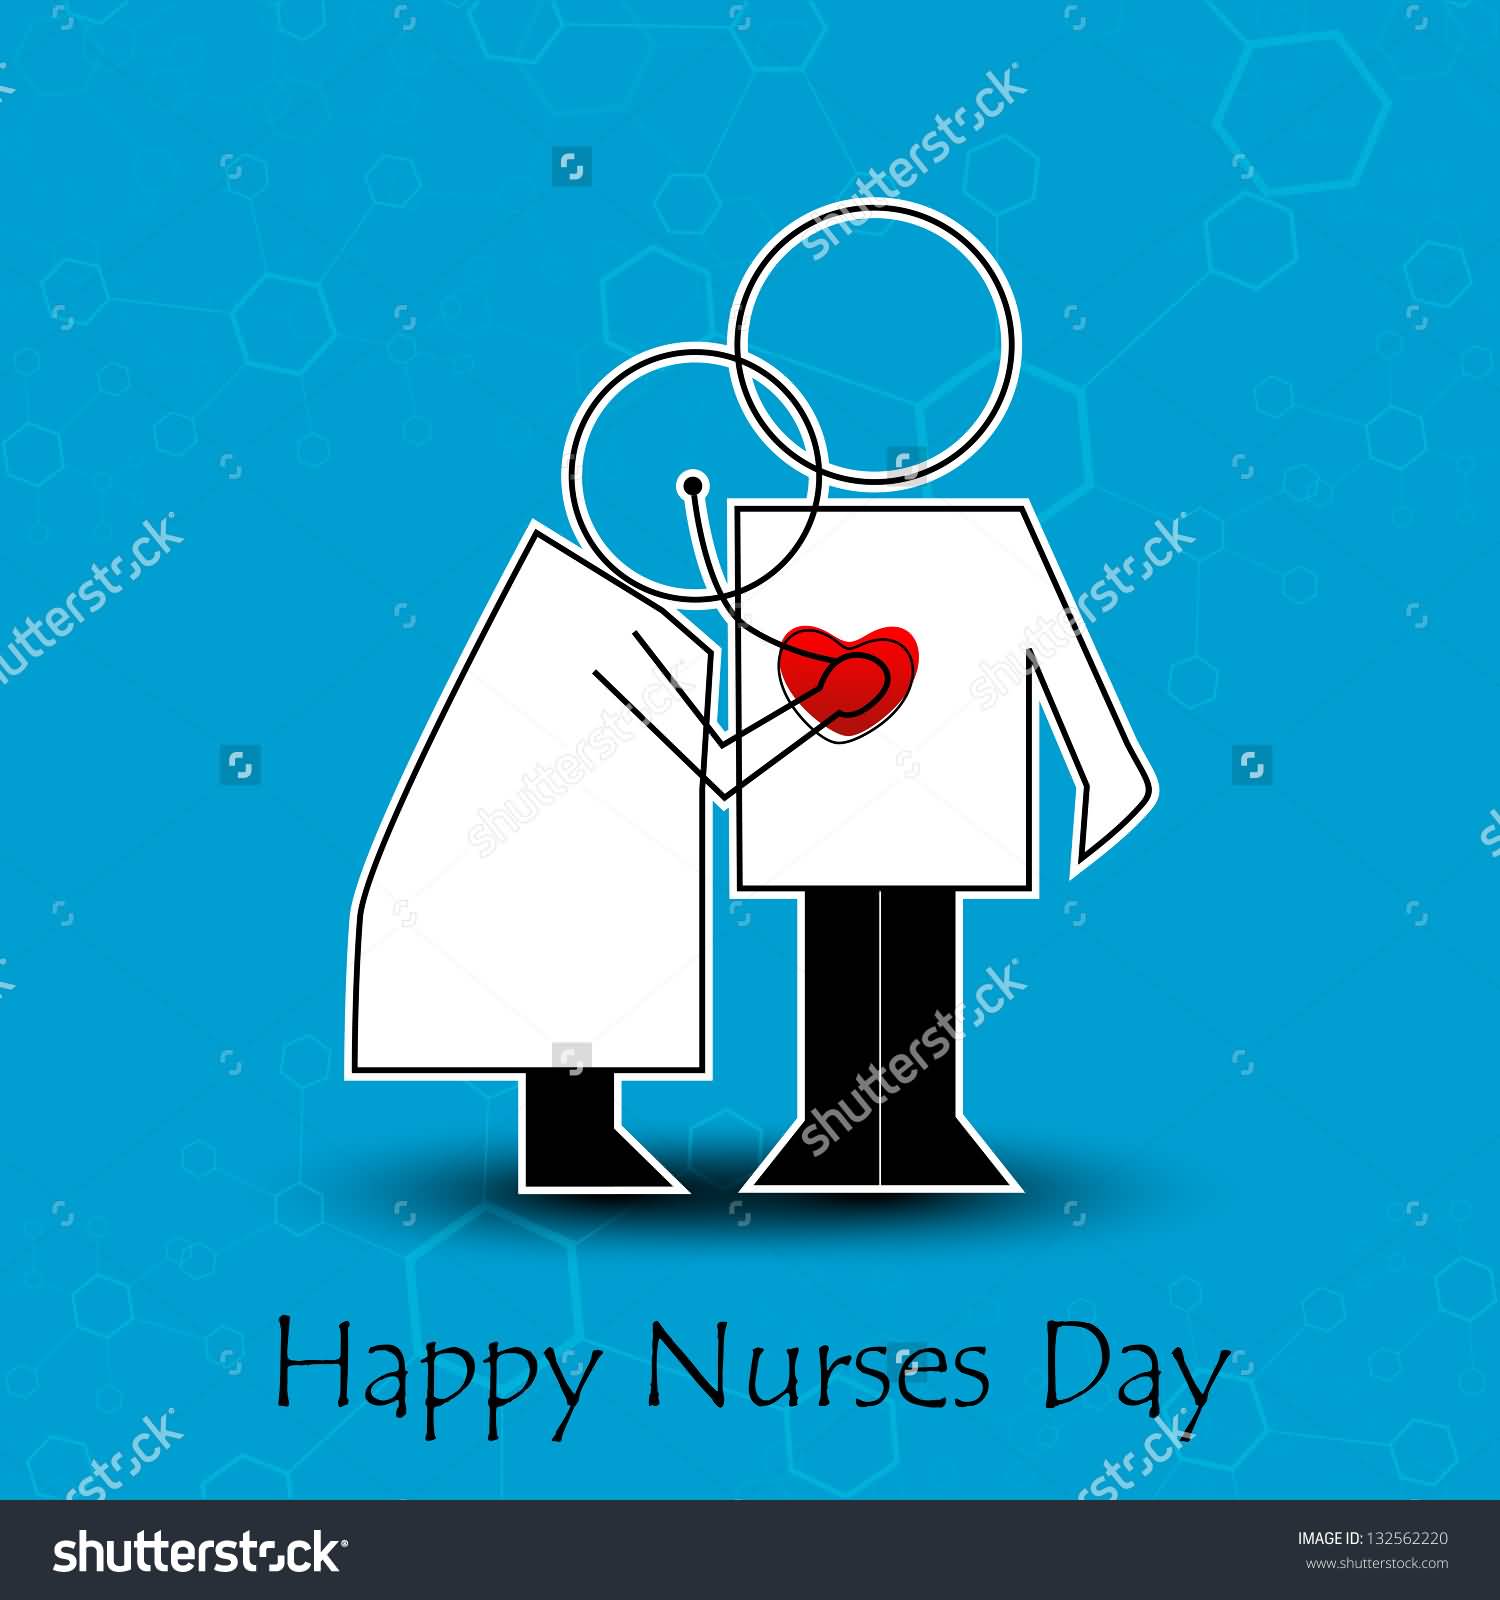 Happy Nurses Day Illustration Of Nurse Checking Patient